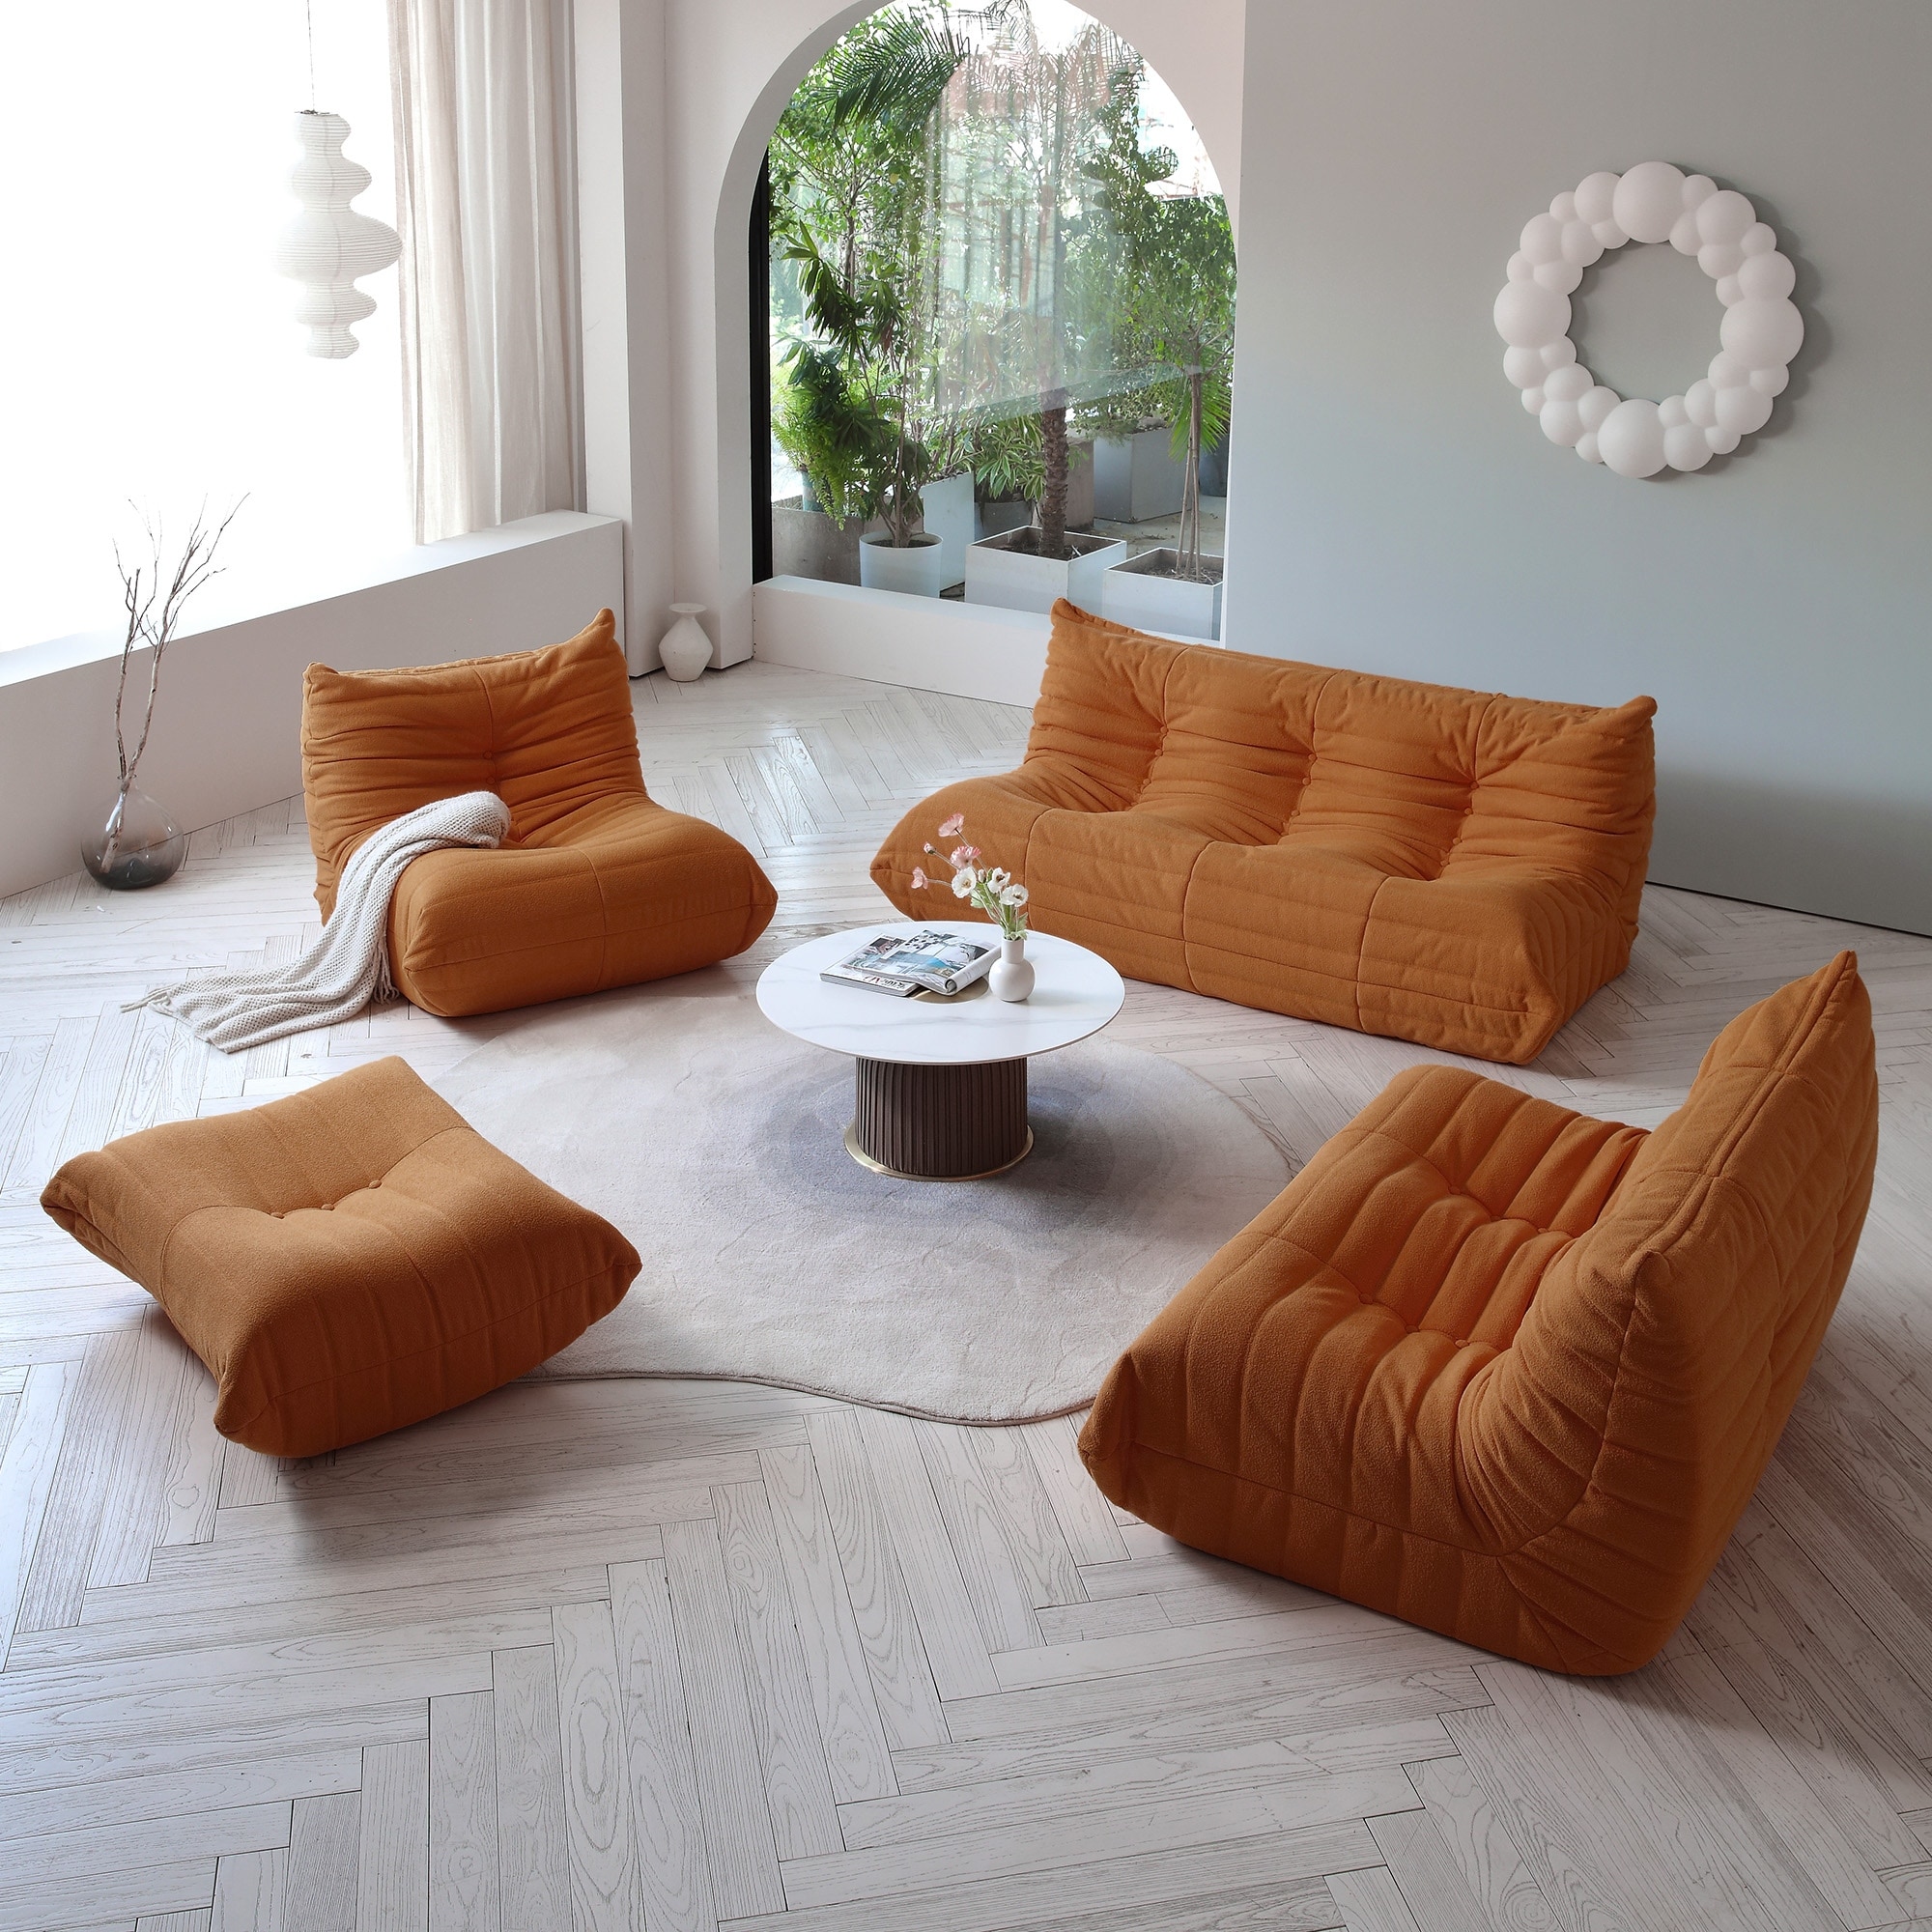 Comfortable Kids Floor Lounger Pillow Bed Yoga Seat Cushion Recliner  Mattress